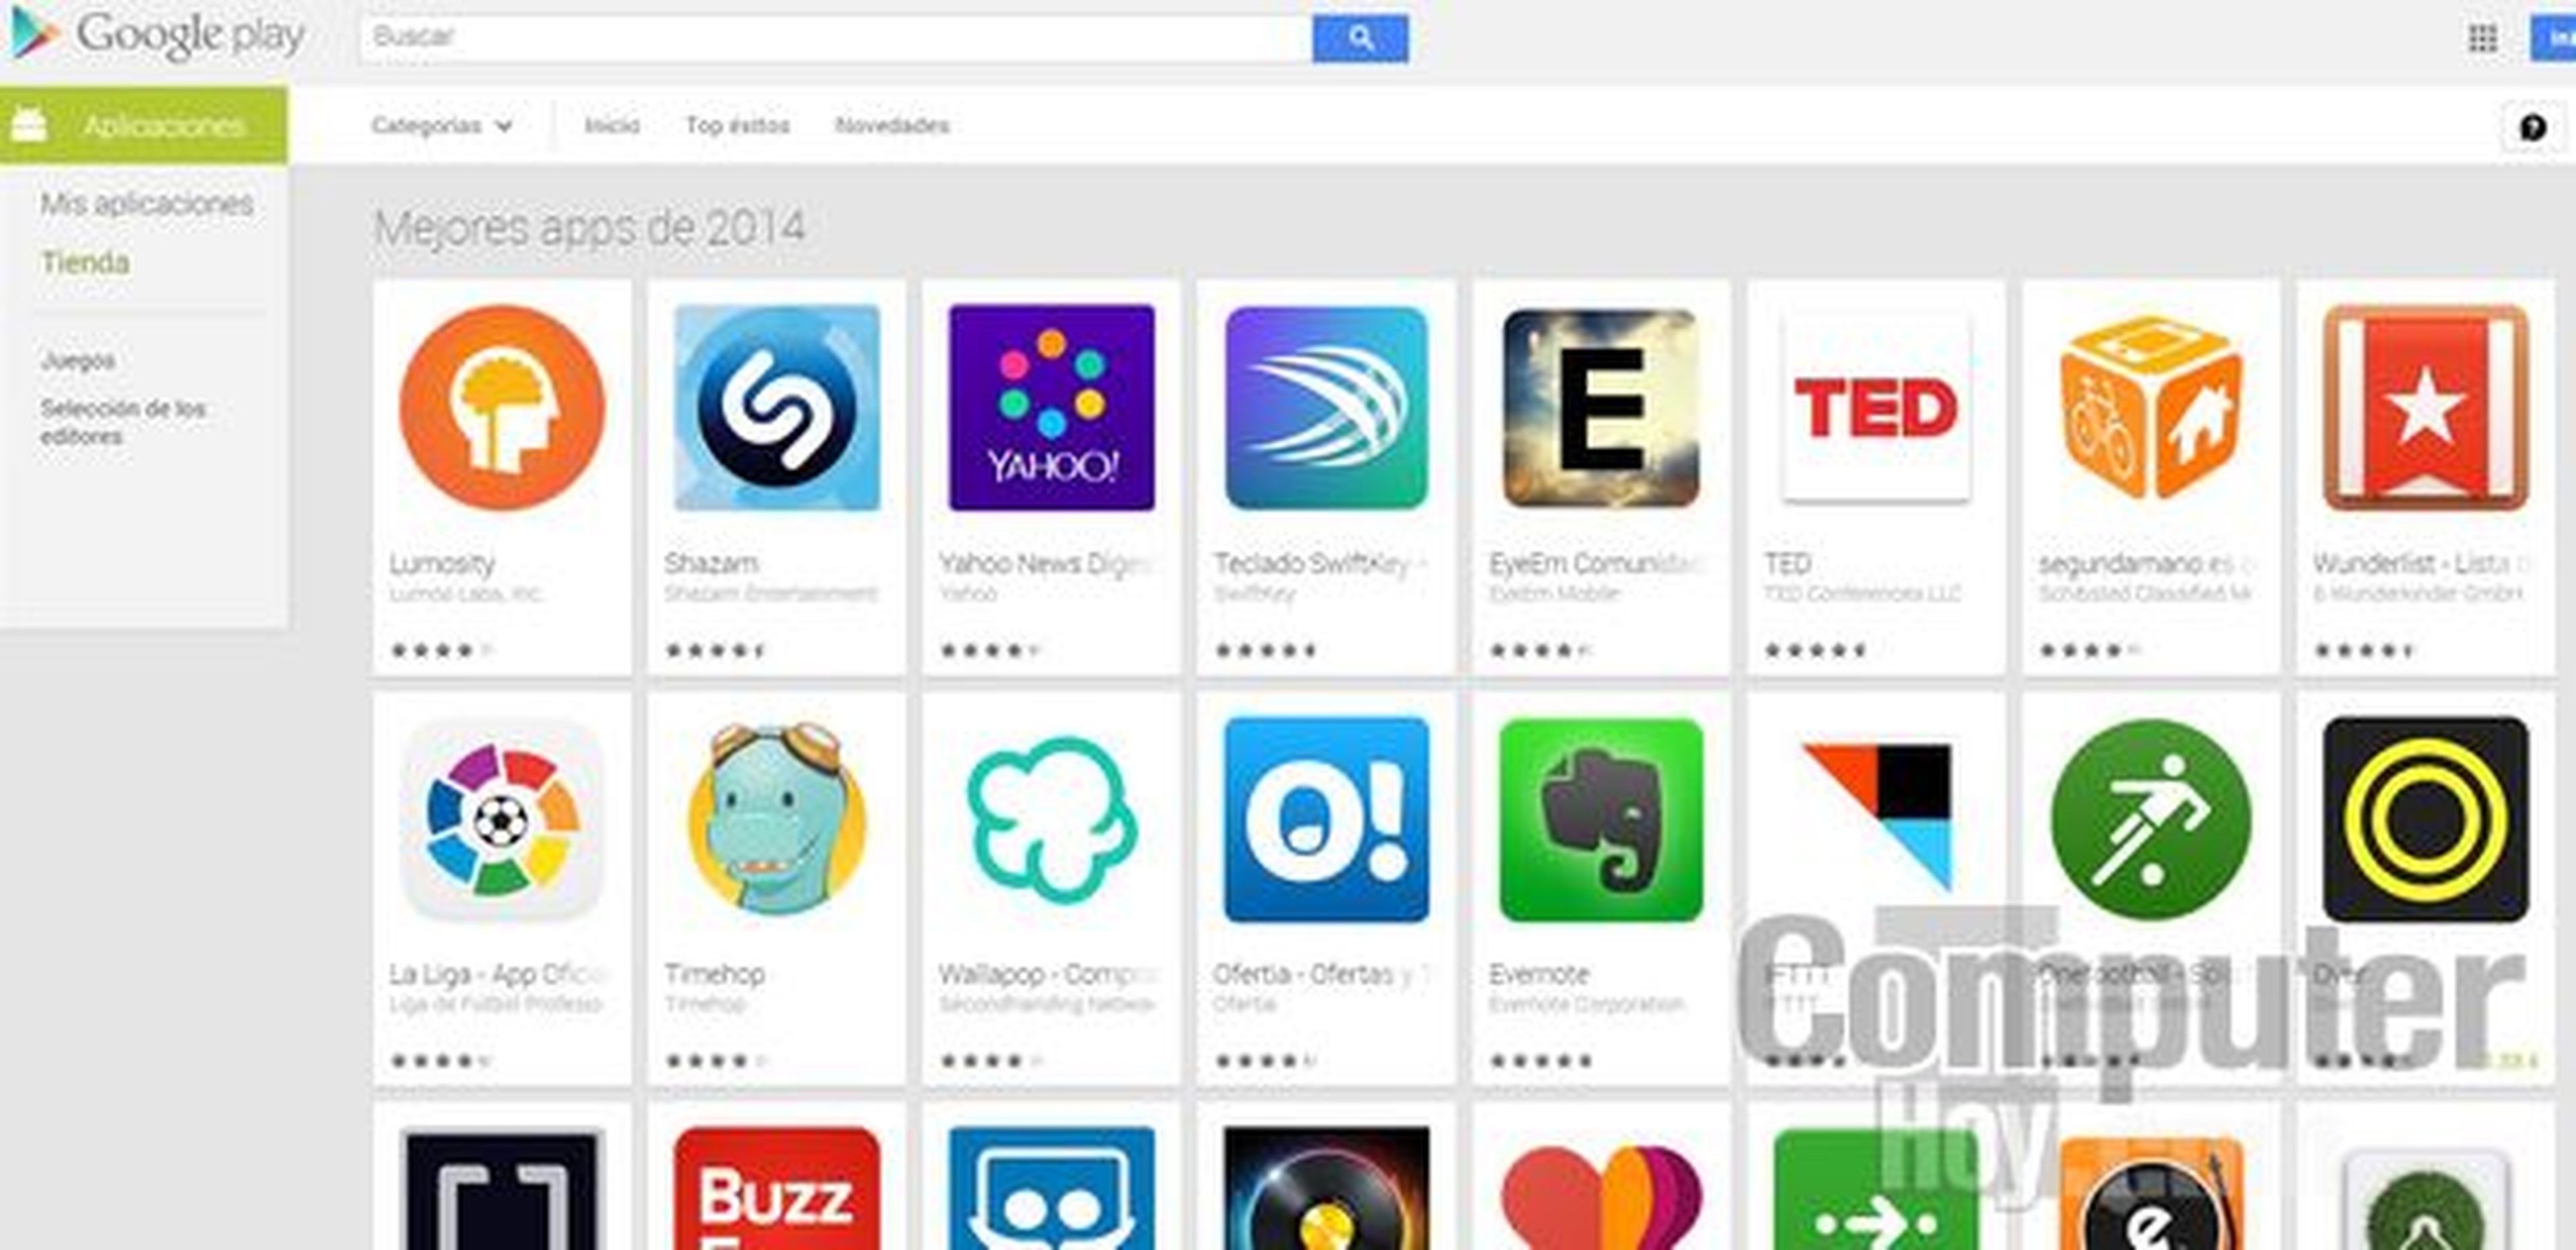 Mejores Apps de Android 2014